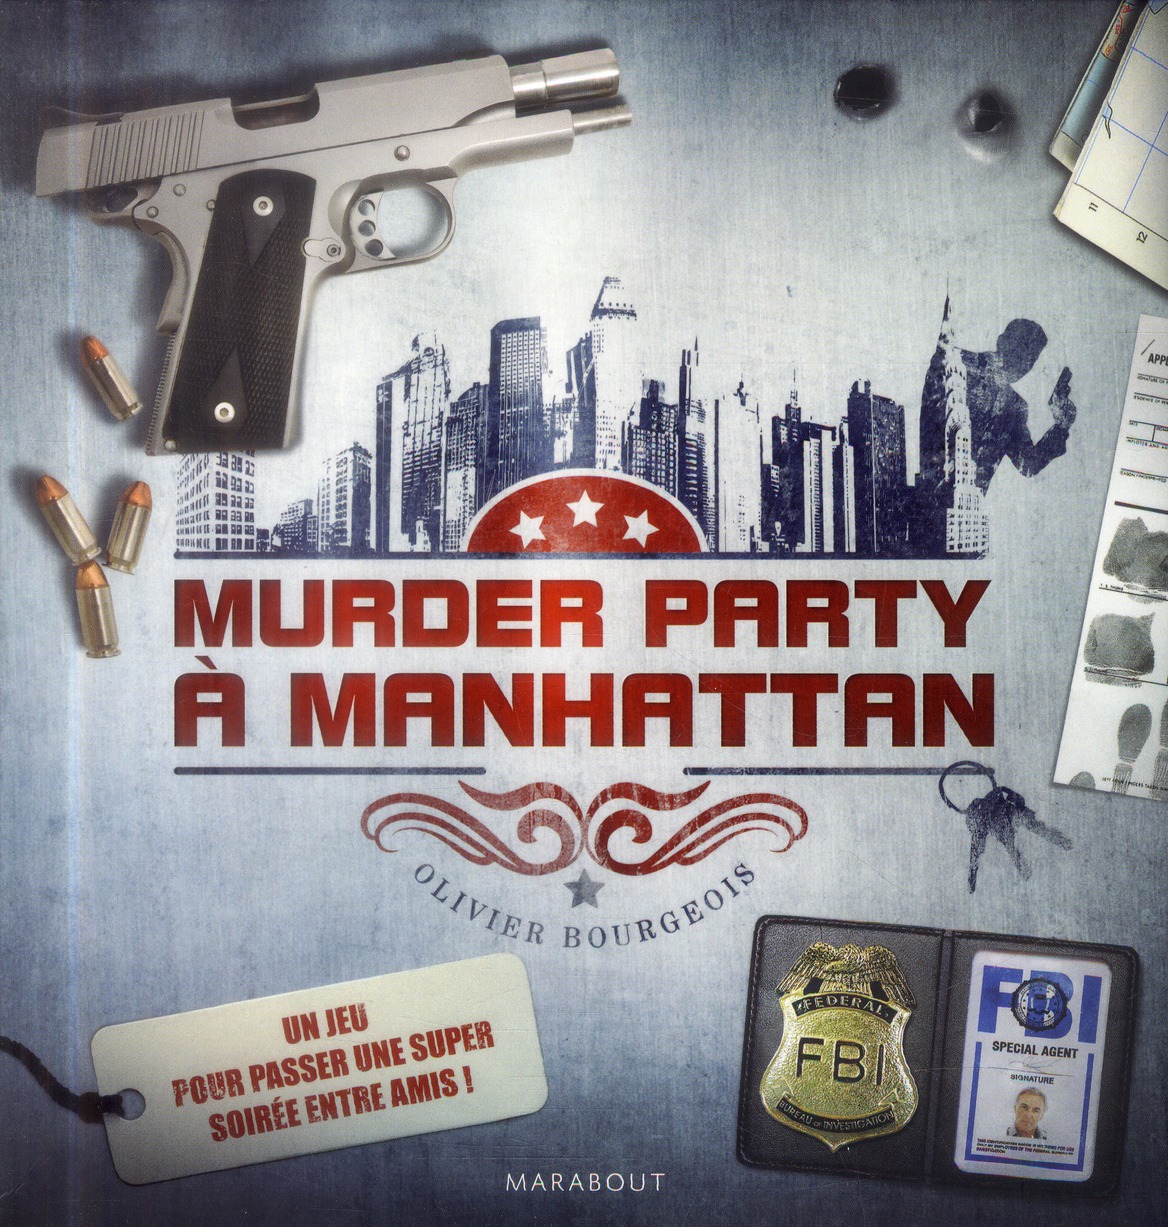 MURDER PARTY A MANHATTAN